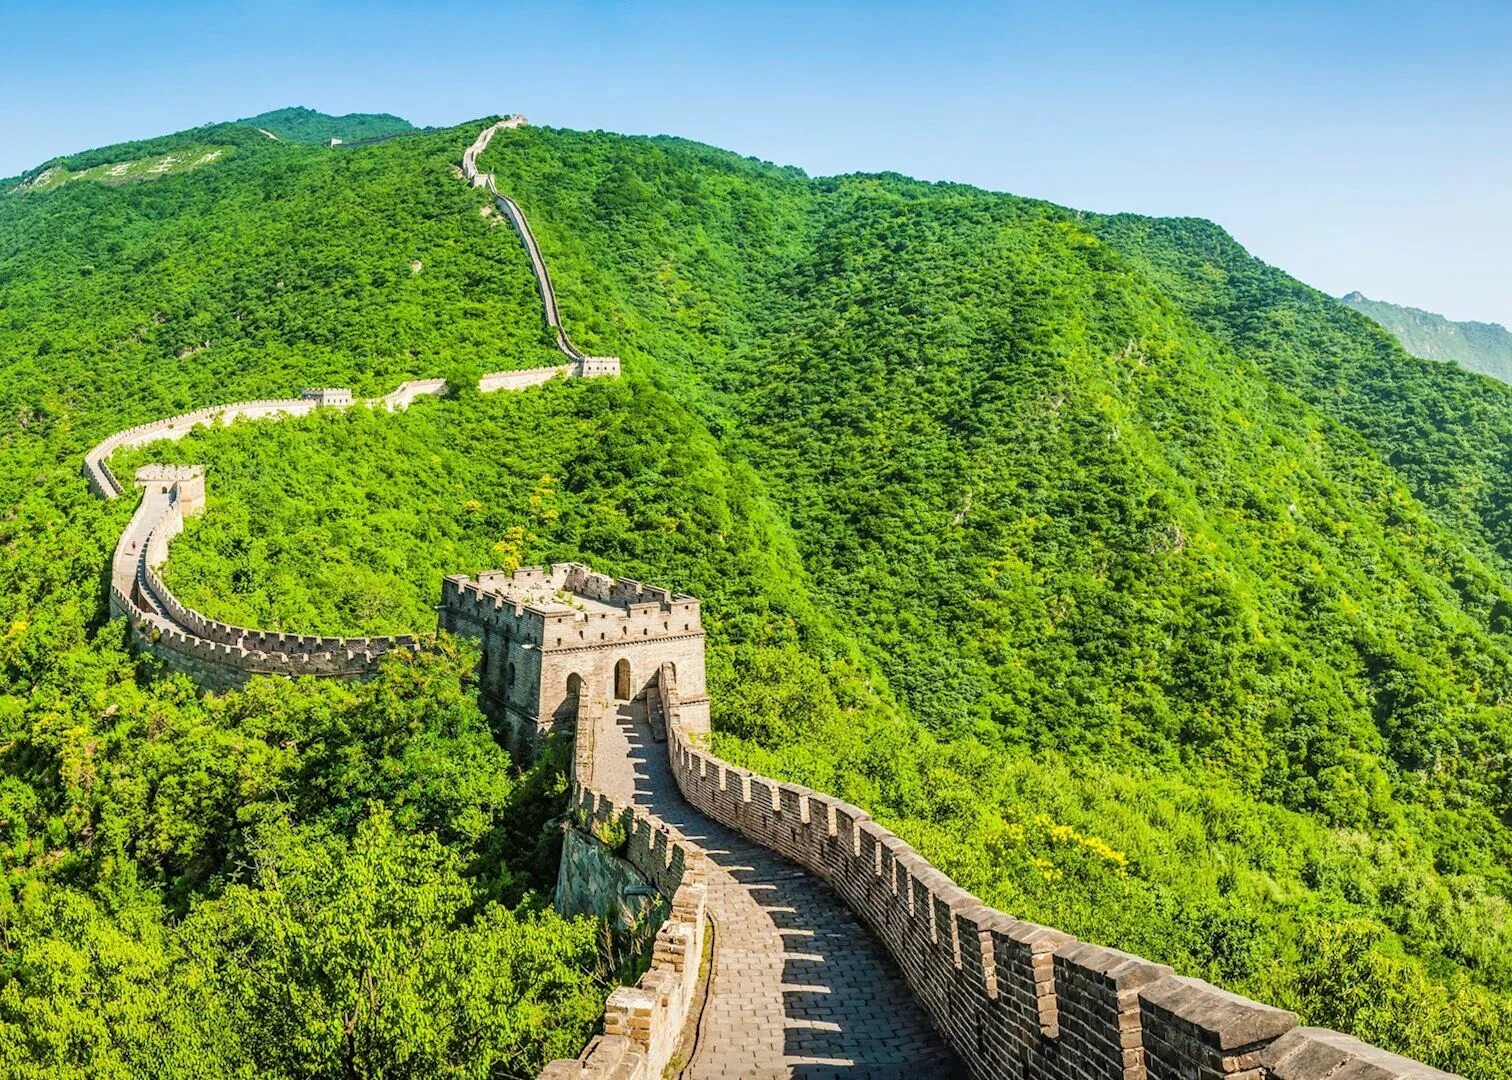 Края китайской стены. Великая китайская стена Пекин. Участок Великой китайской стены Мутяньюй. Цзиньшаньлин Великая китайская стена. Бадалин китайская стена.